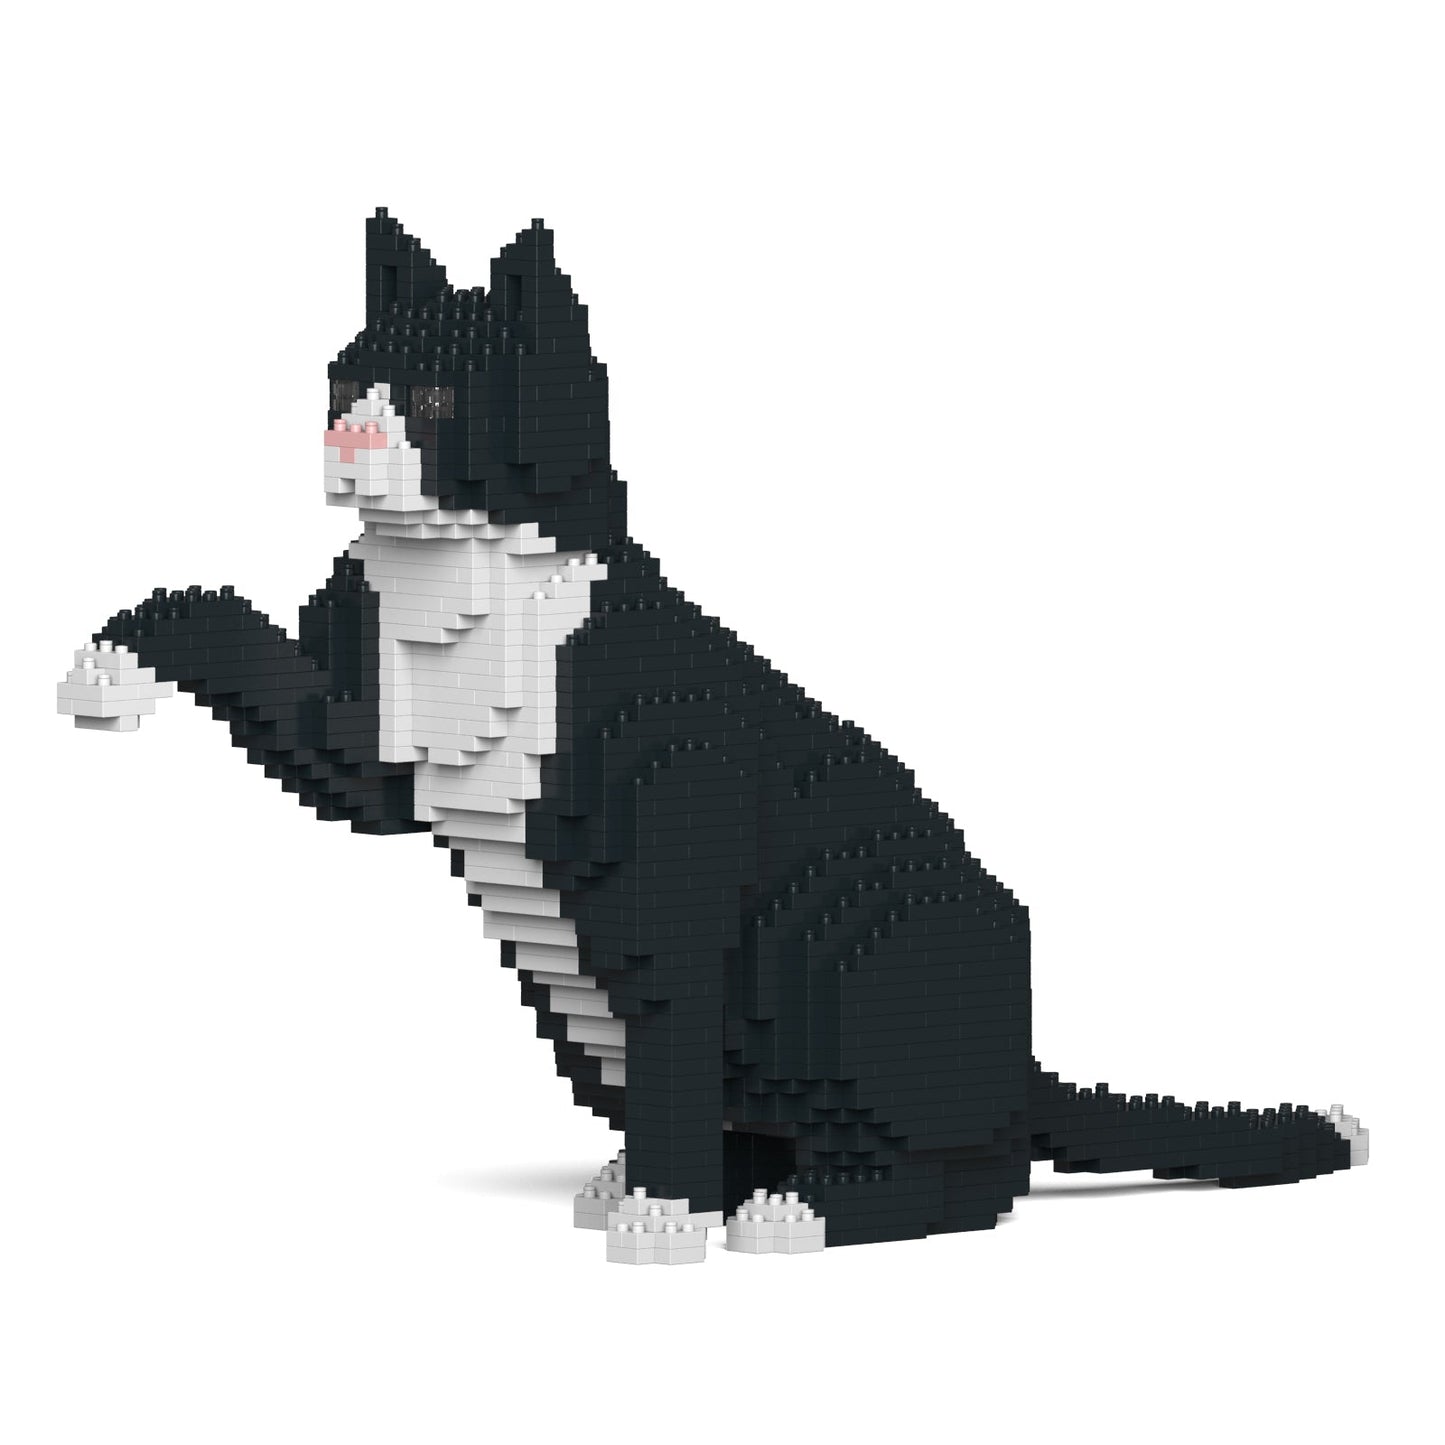 Tuxedo Cat 03S